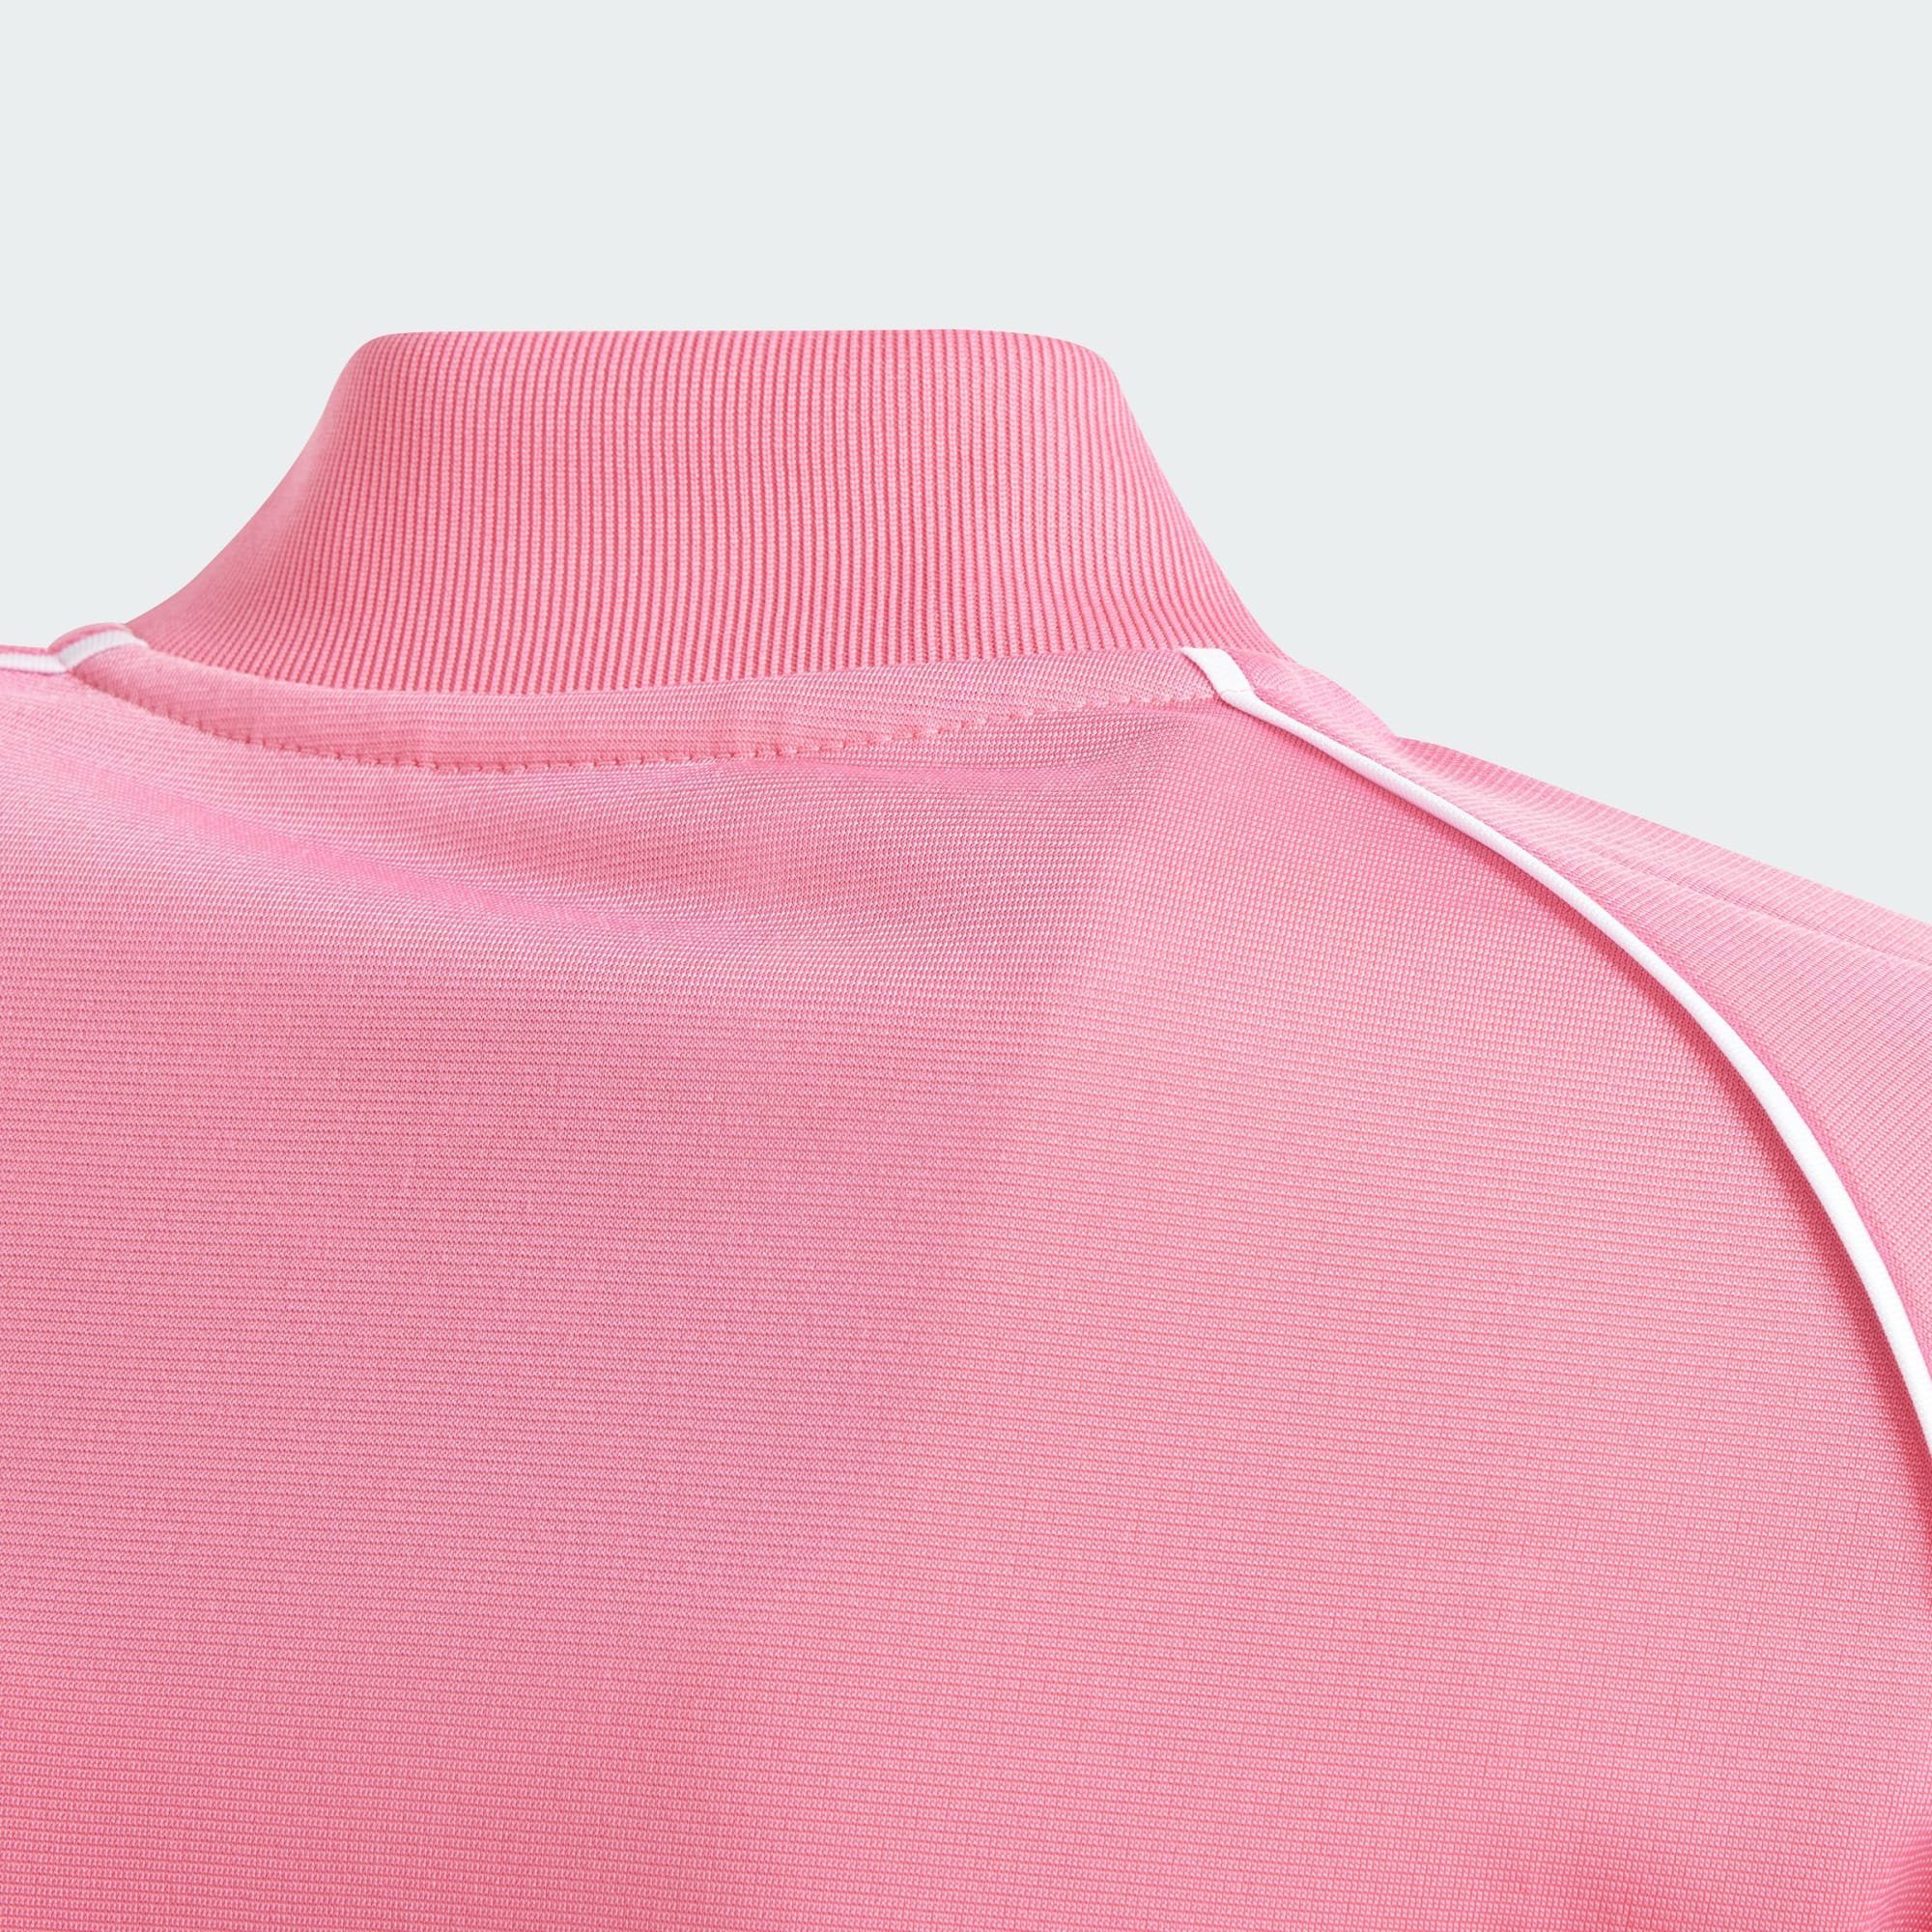 adidas Originals Trainingsjacke ADICOLOR JACKE SST Pink ORIGINALS Fusion